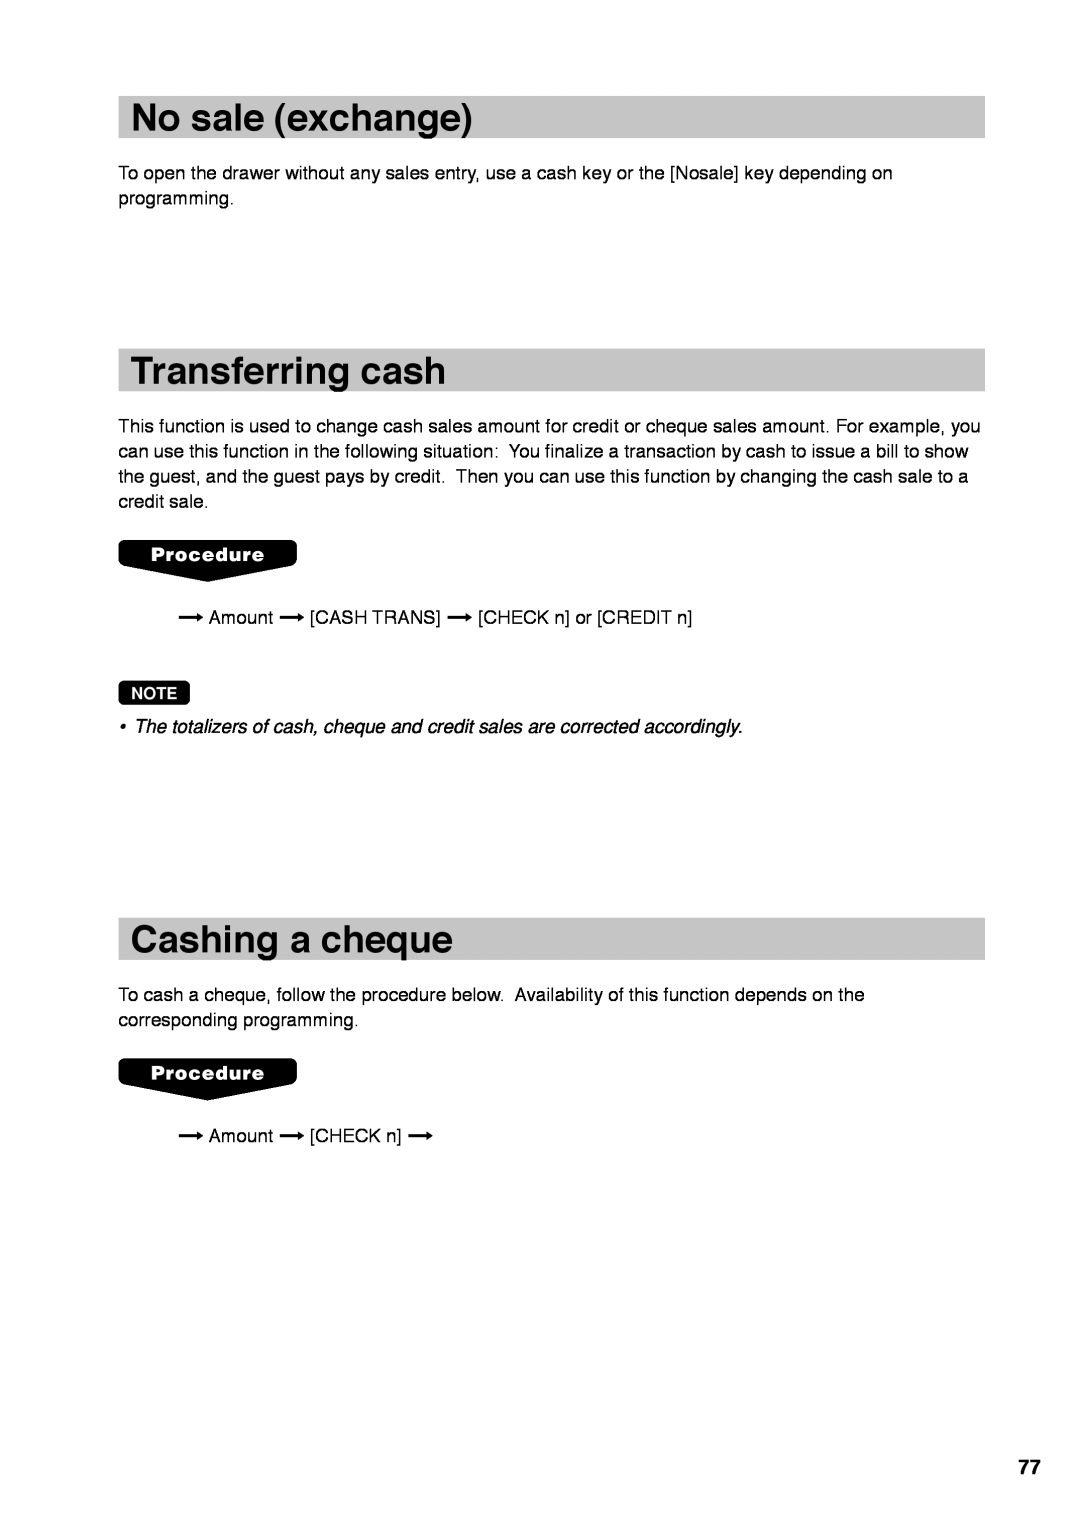 Sharp UP-X300 instruction manual No sale exchange, Transferring cash, Cashing a cheque 